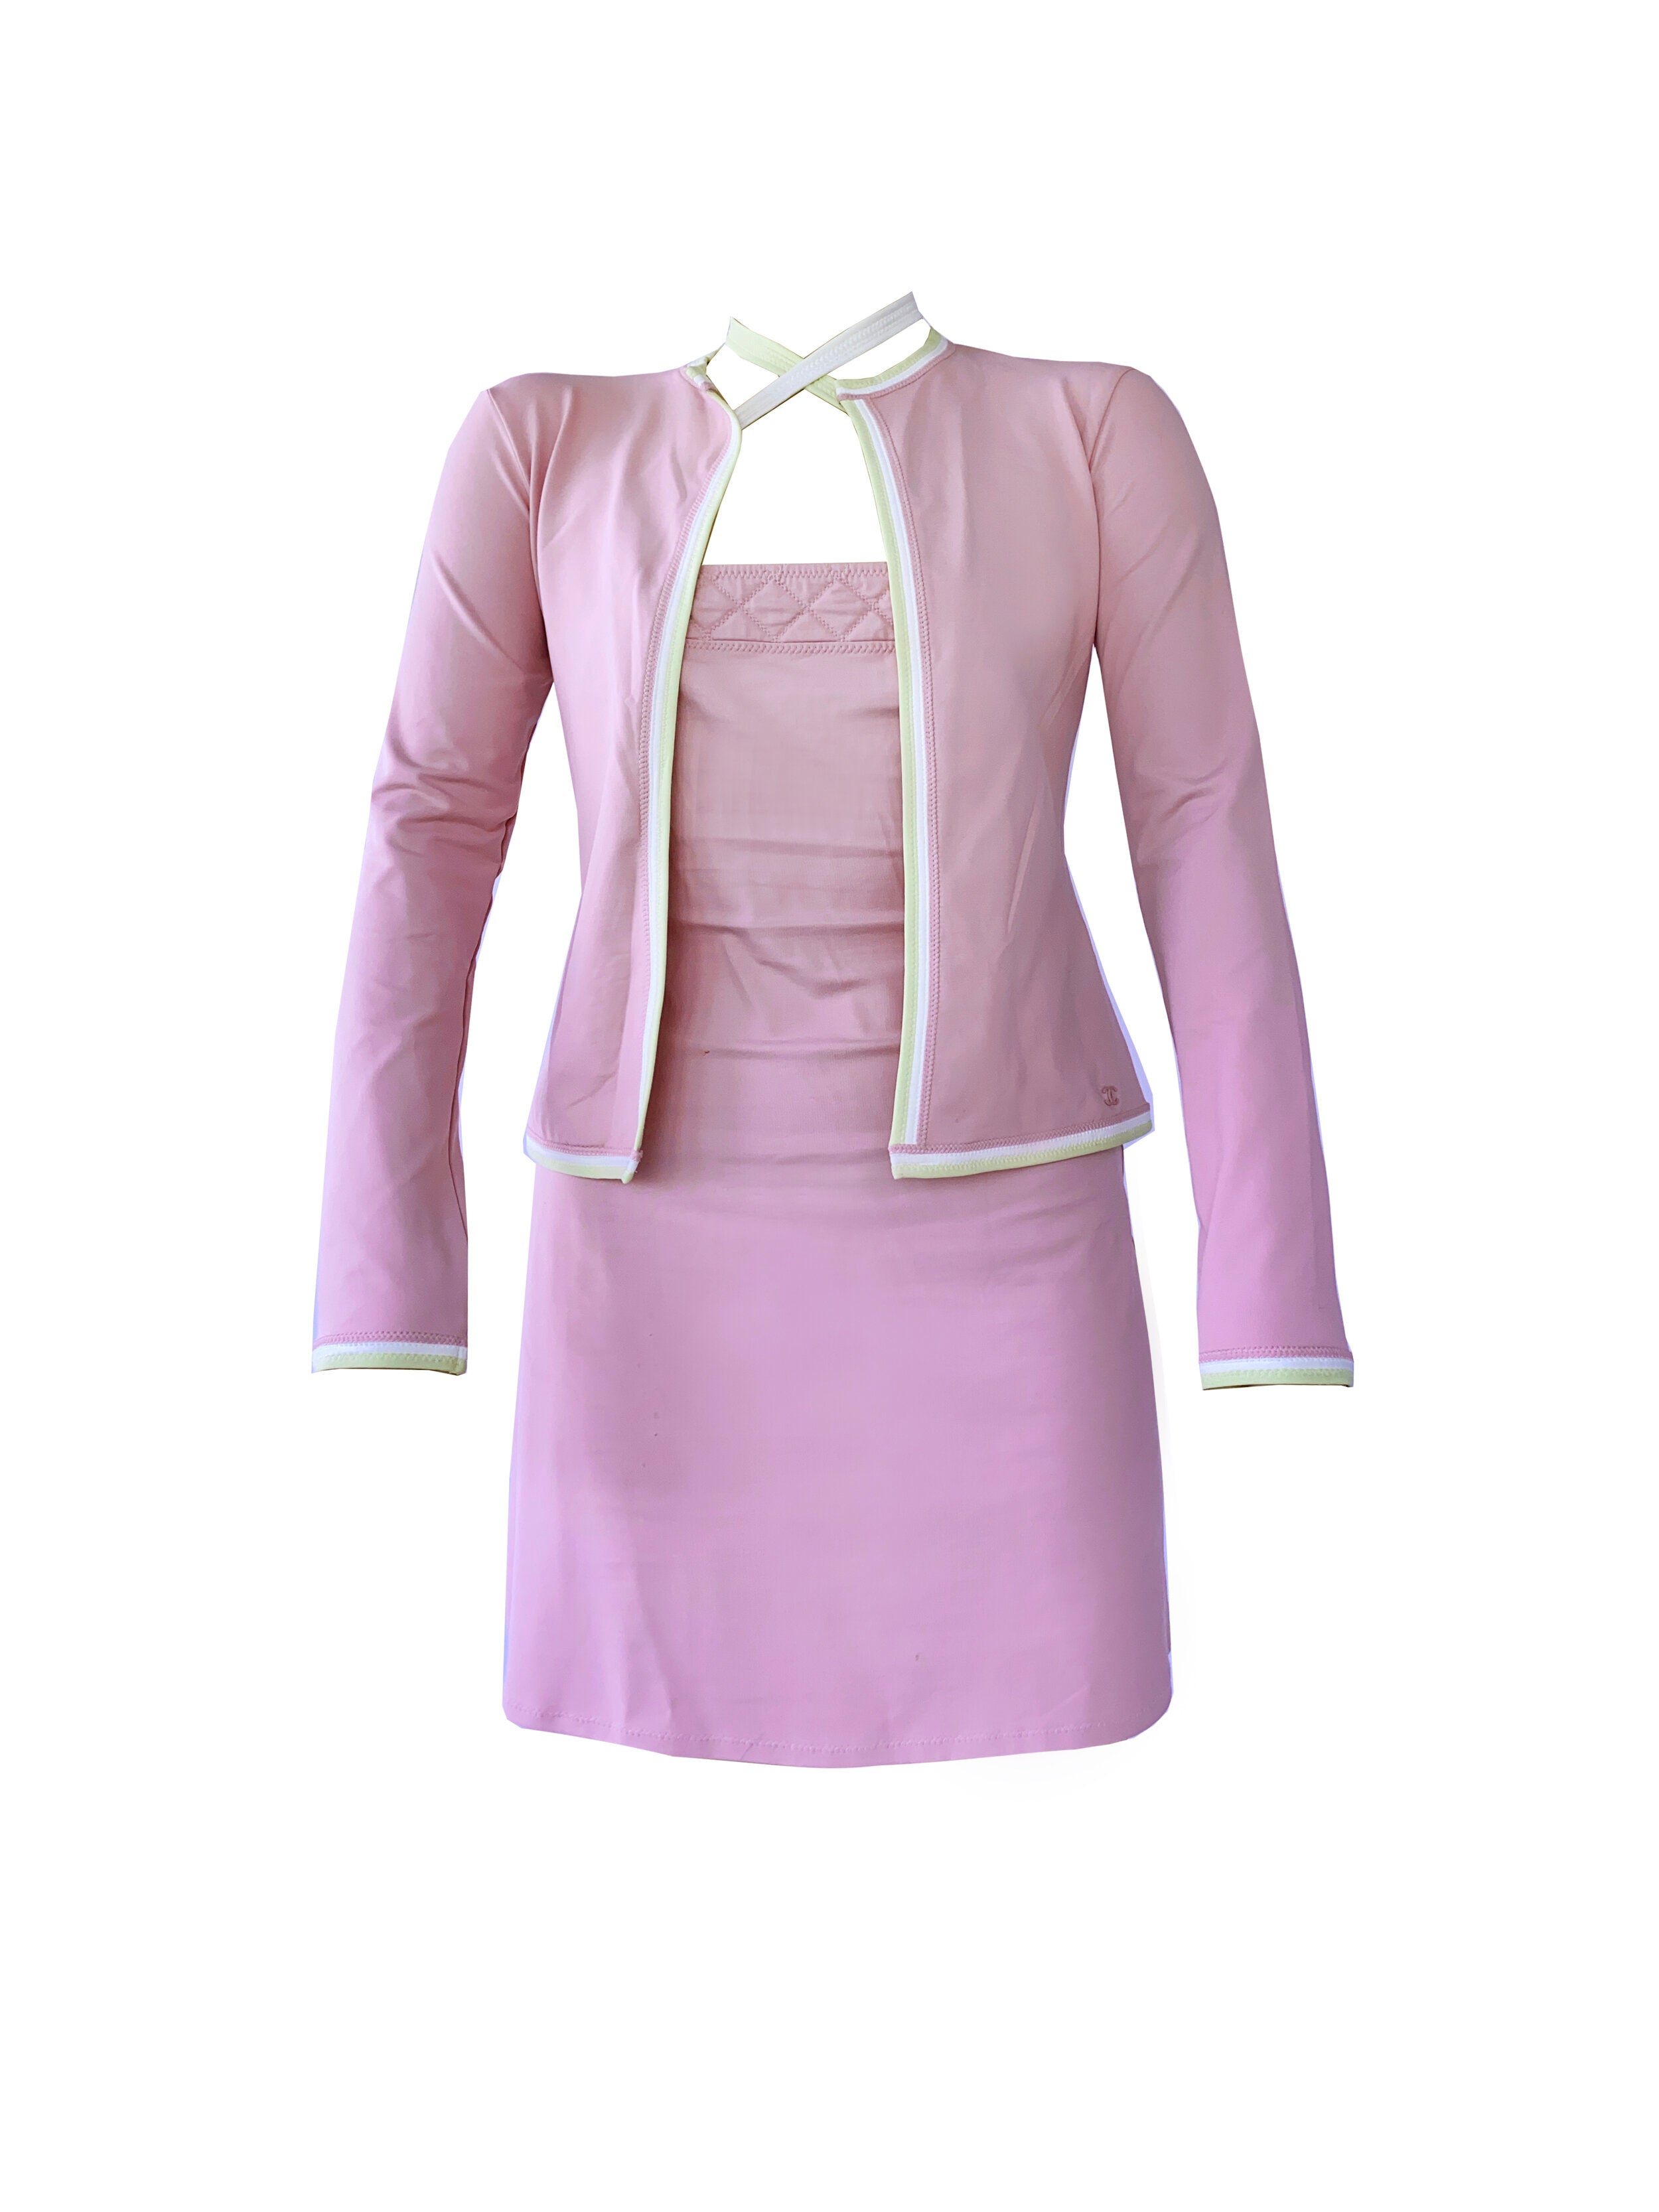 Chanel 2000s Rare Pink Jersey Dress Set